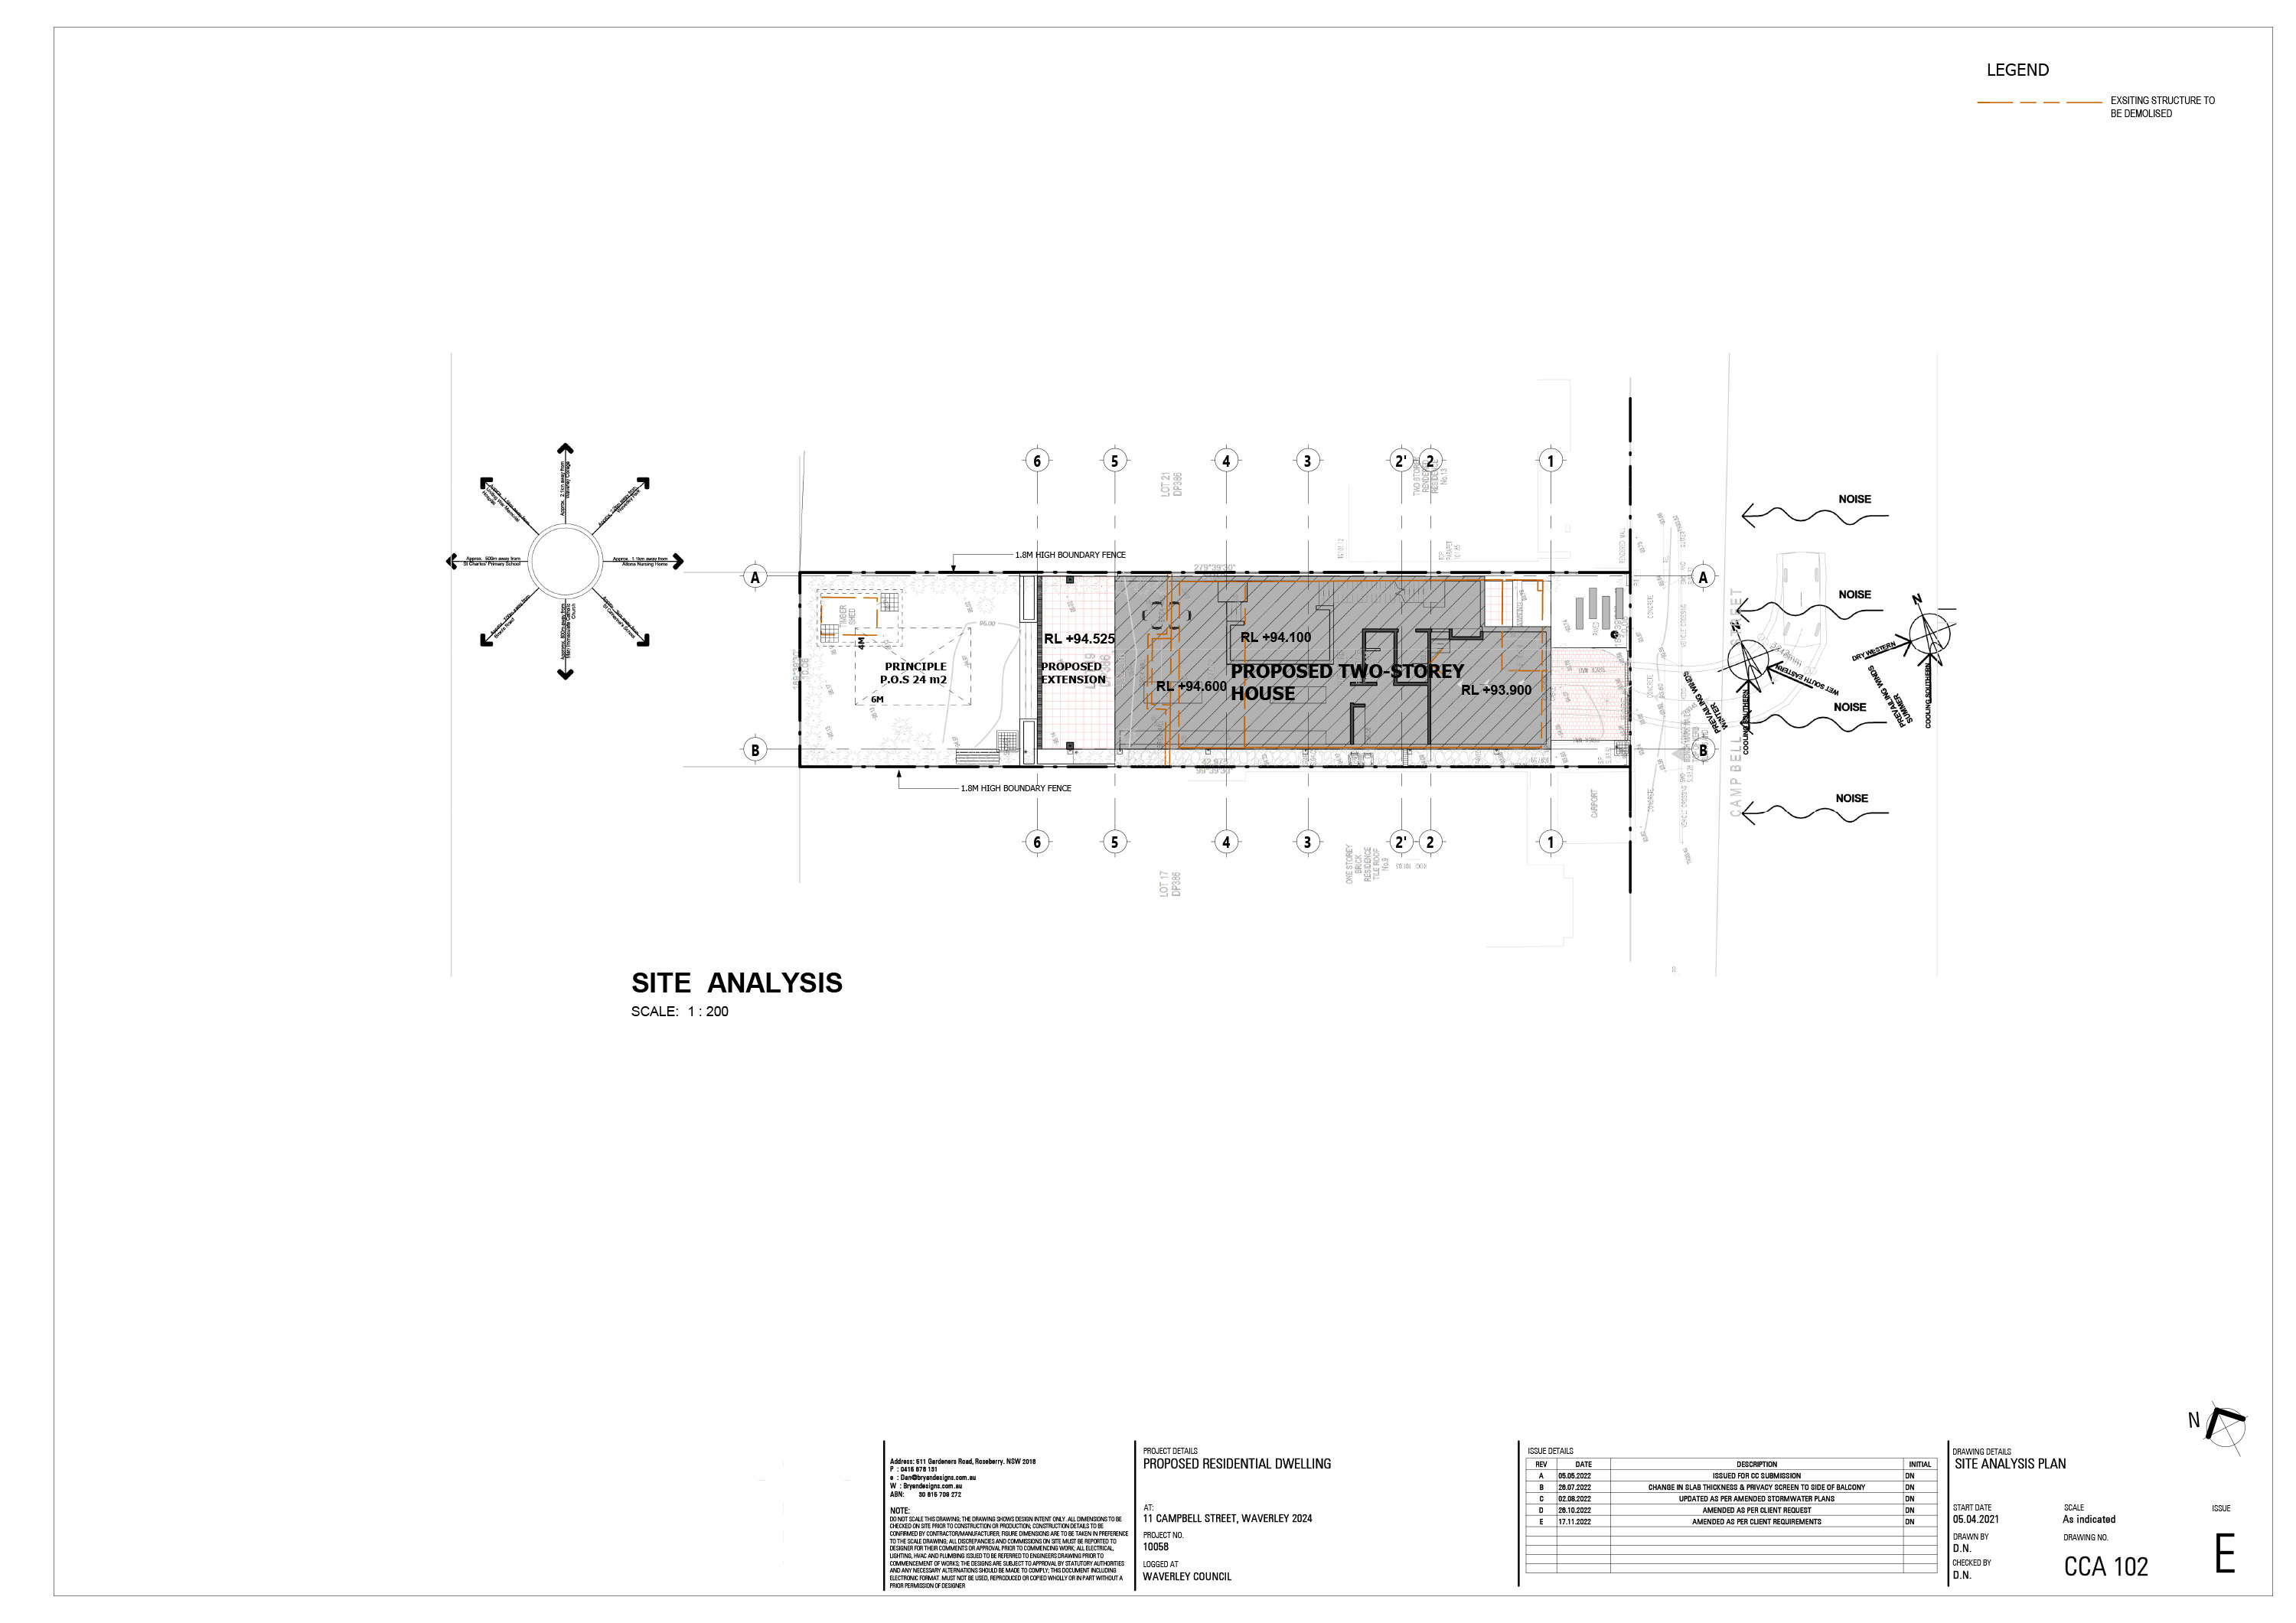 CCA Issue E Architectural Plans22.11.17 4